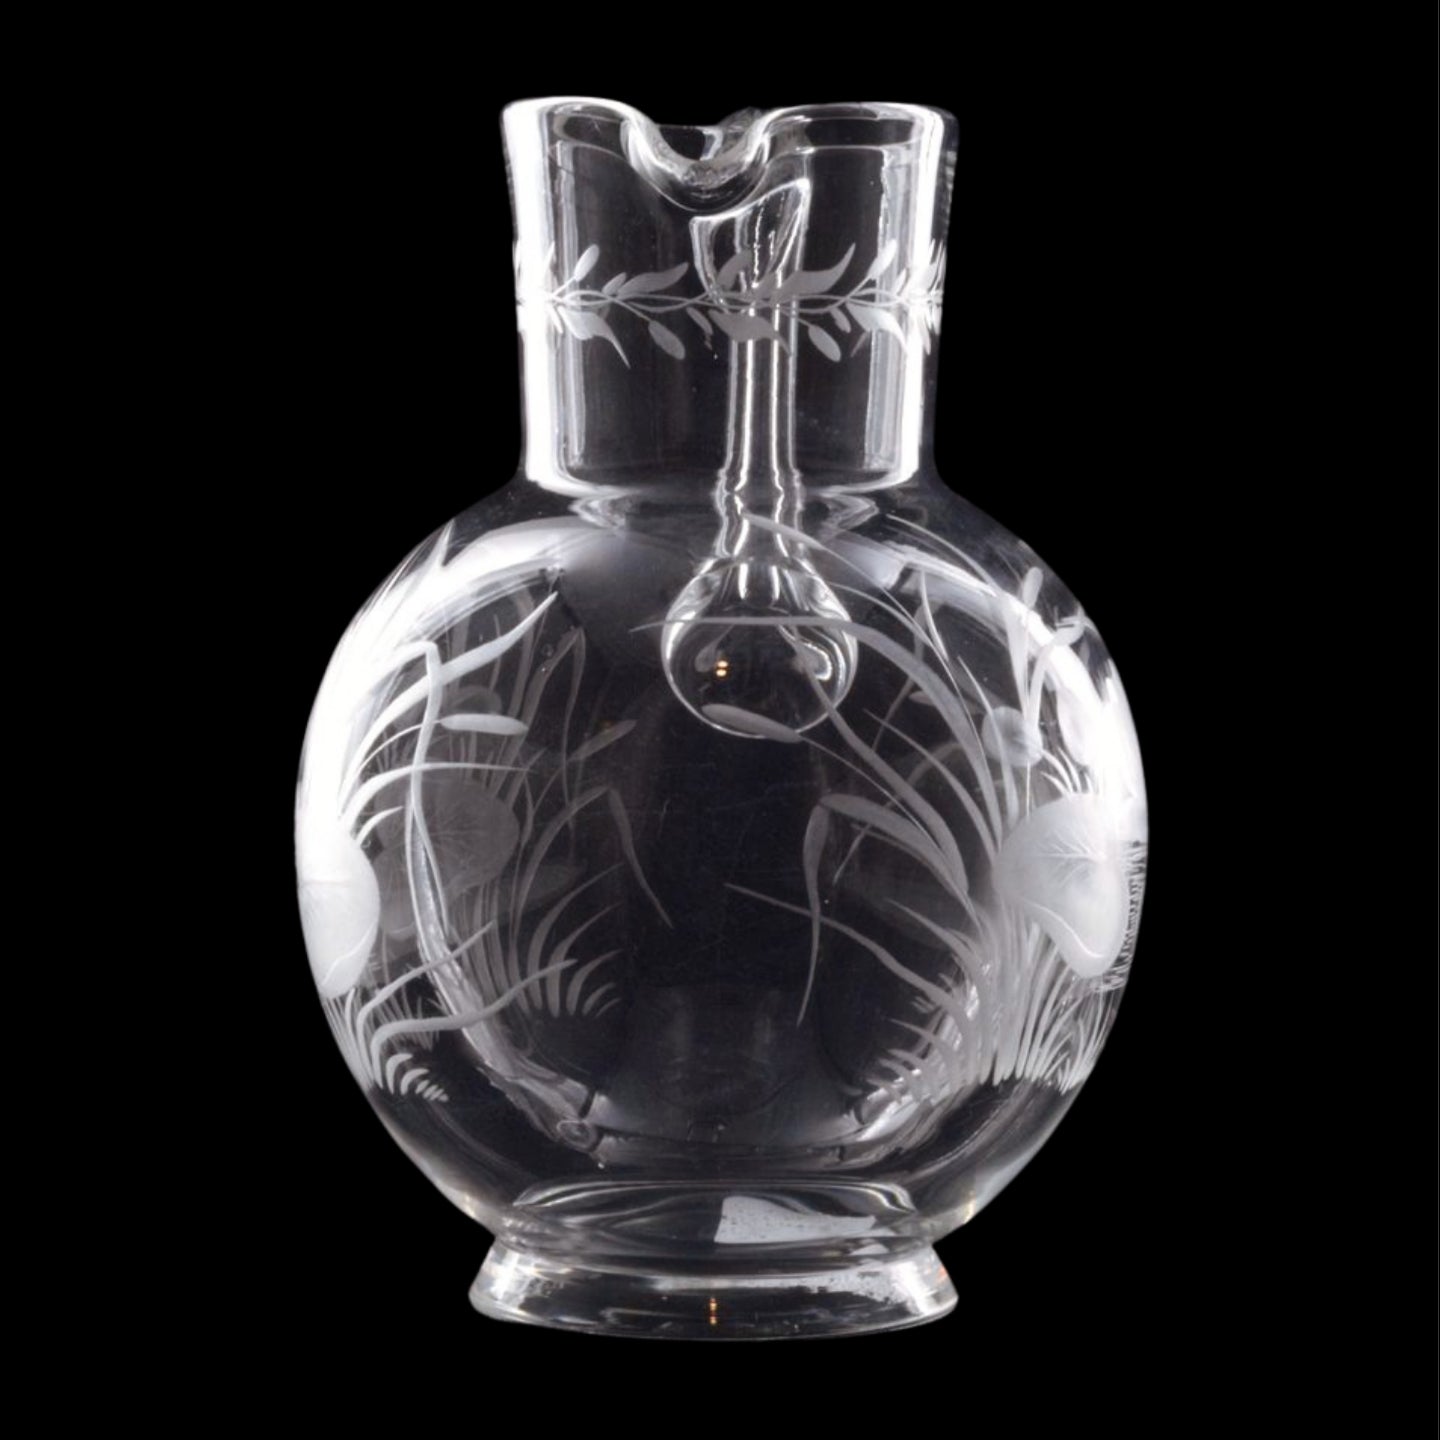 A Stourbridge glass jug